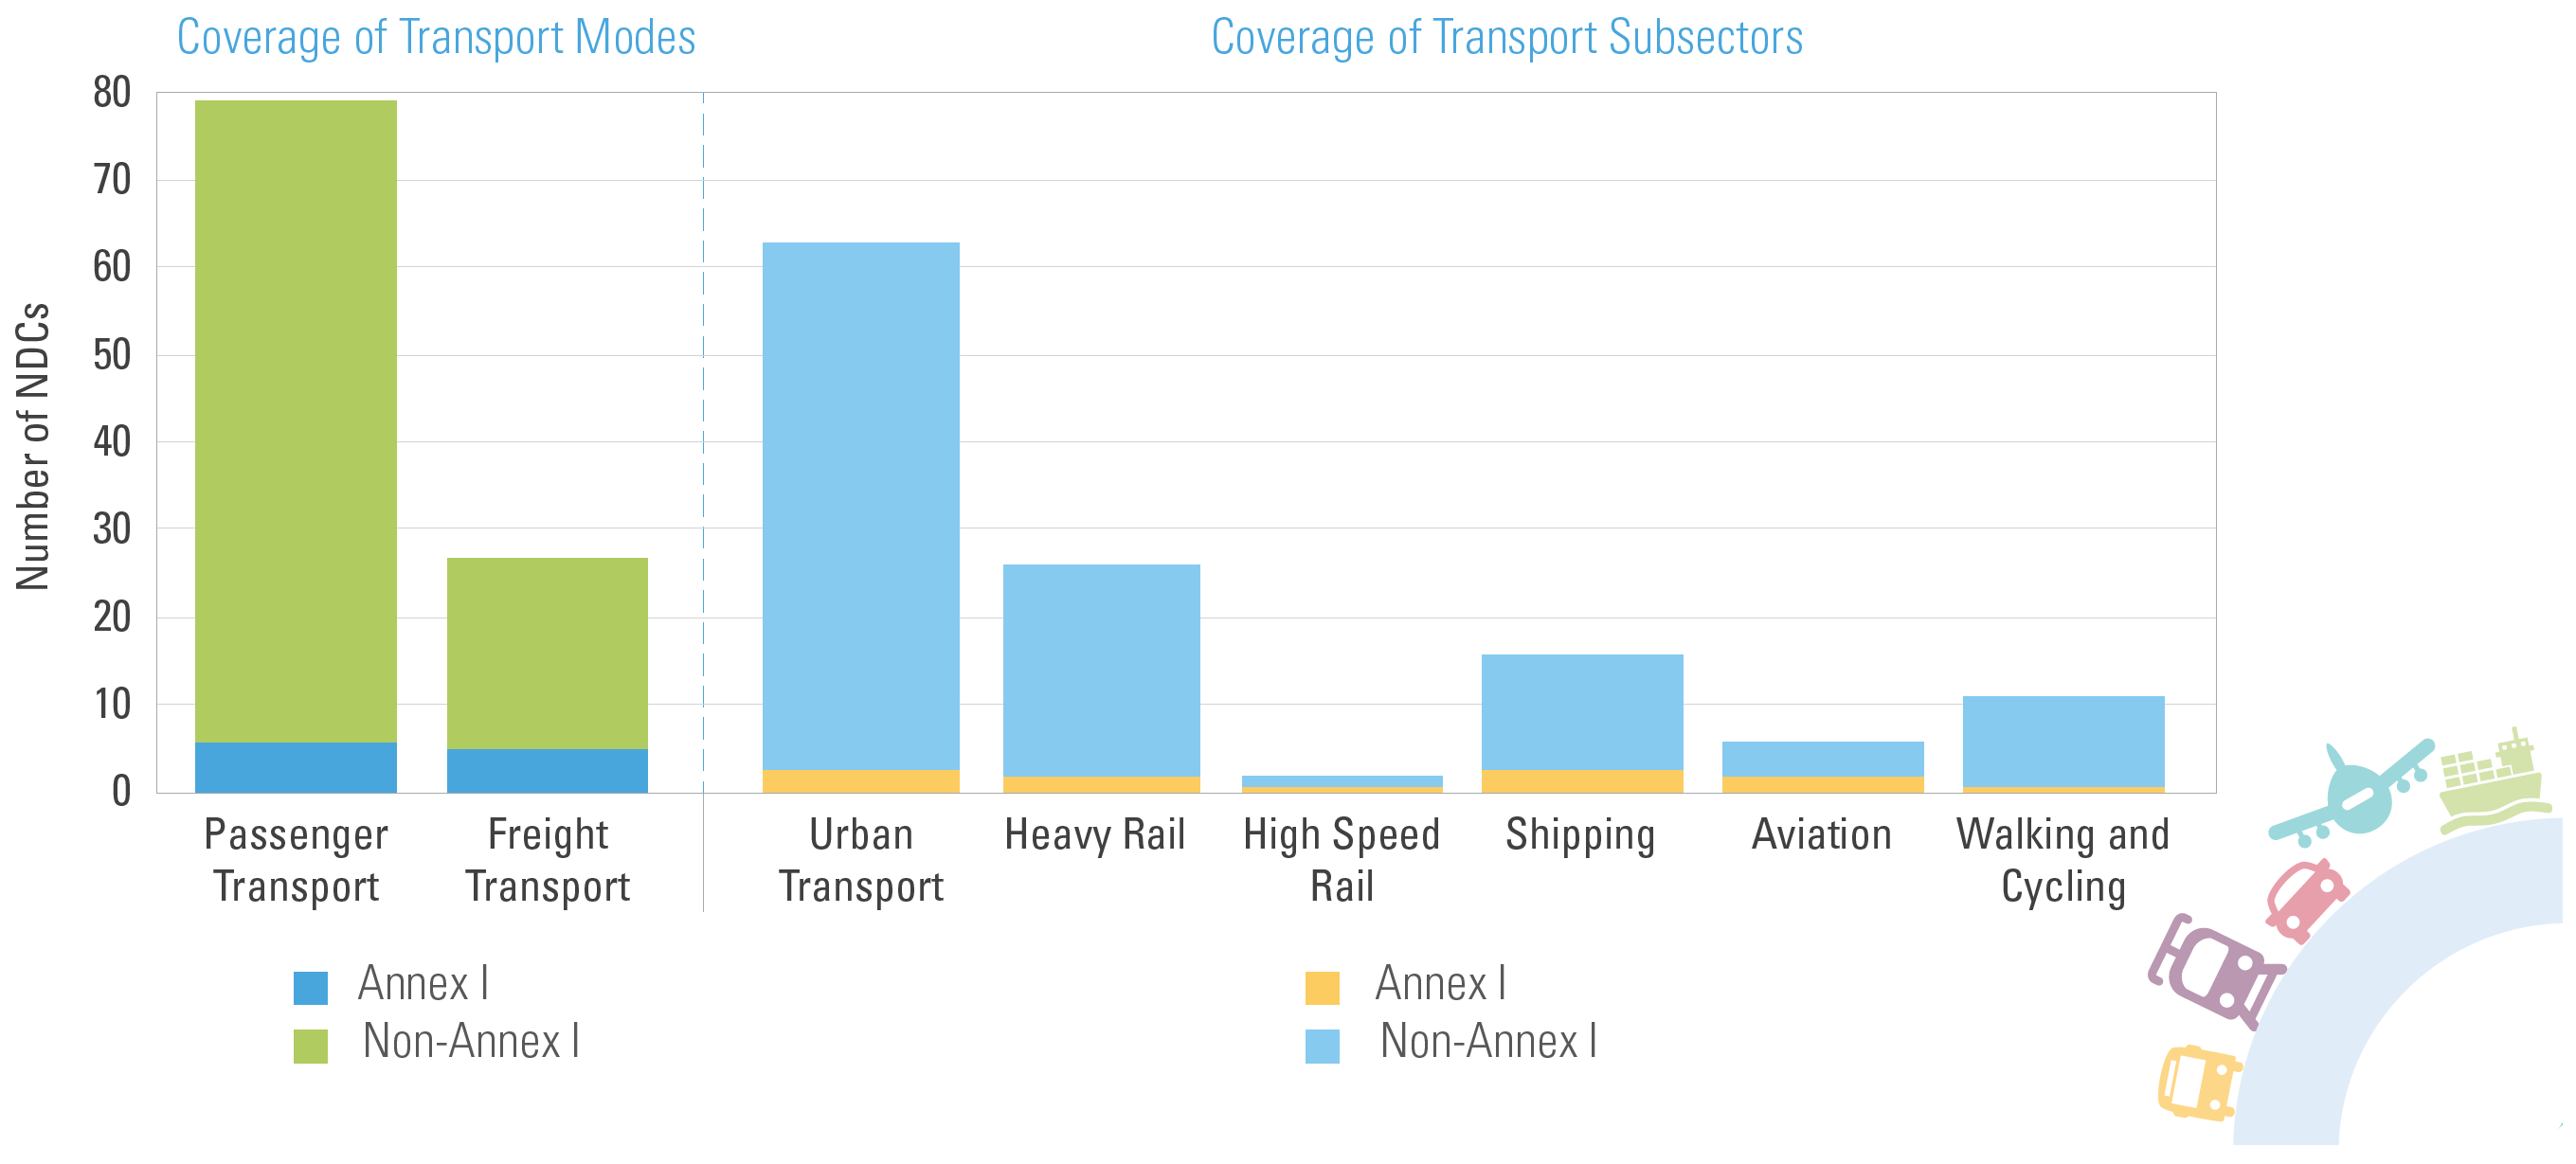 Transport in NDCs